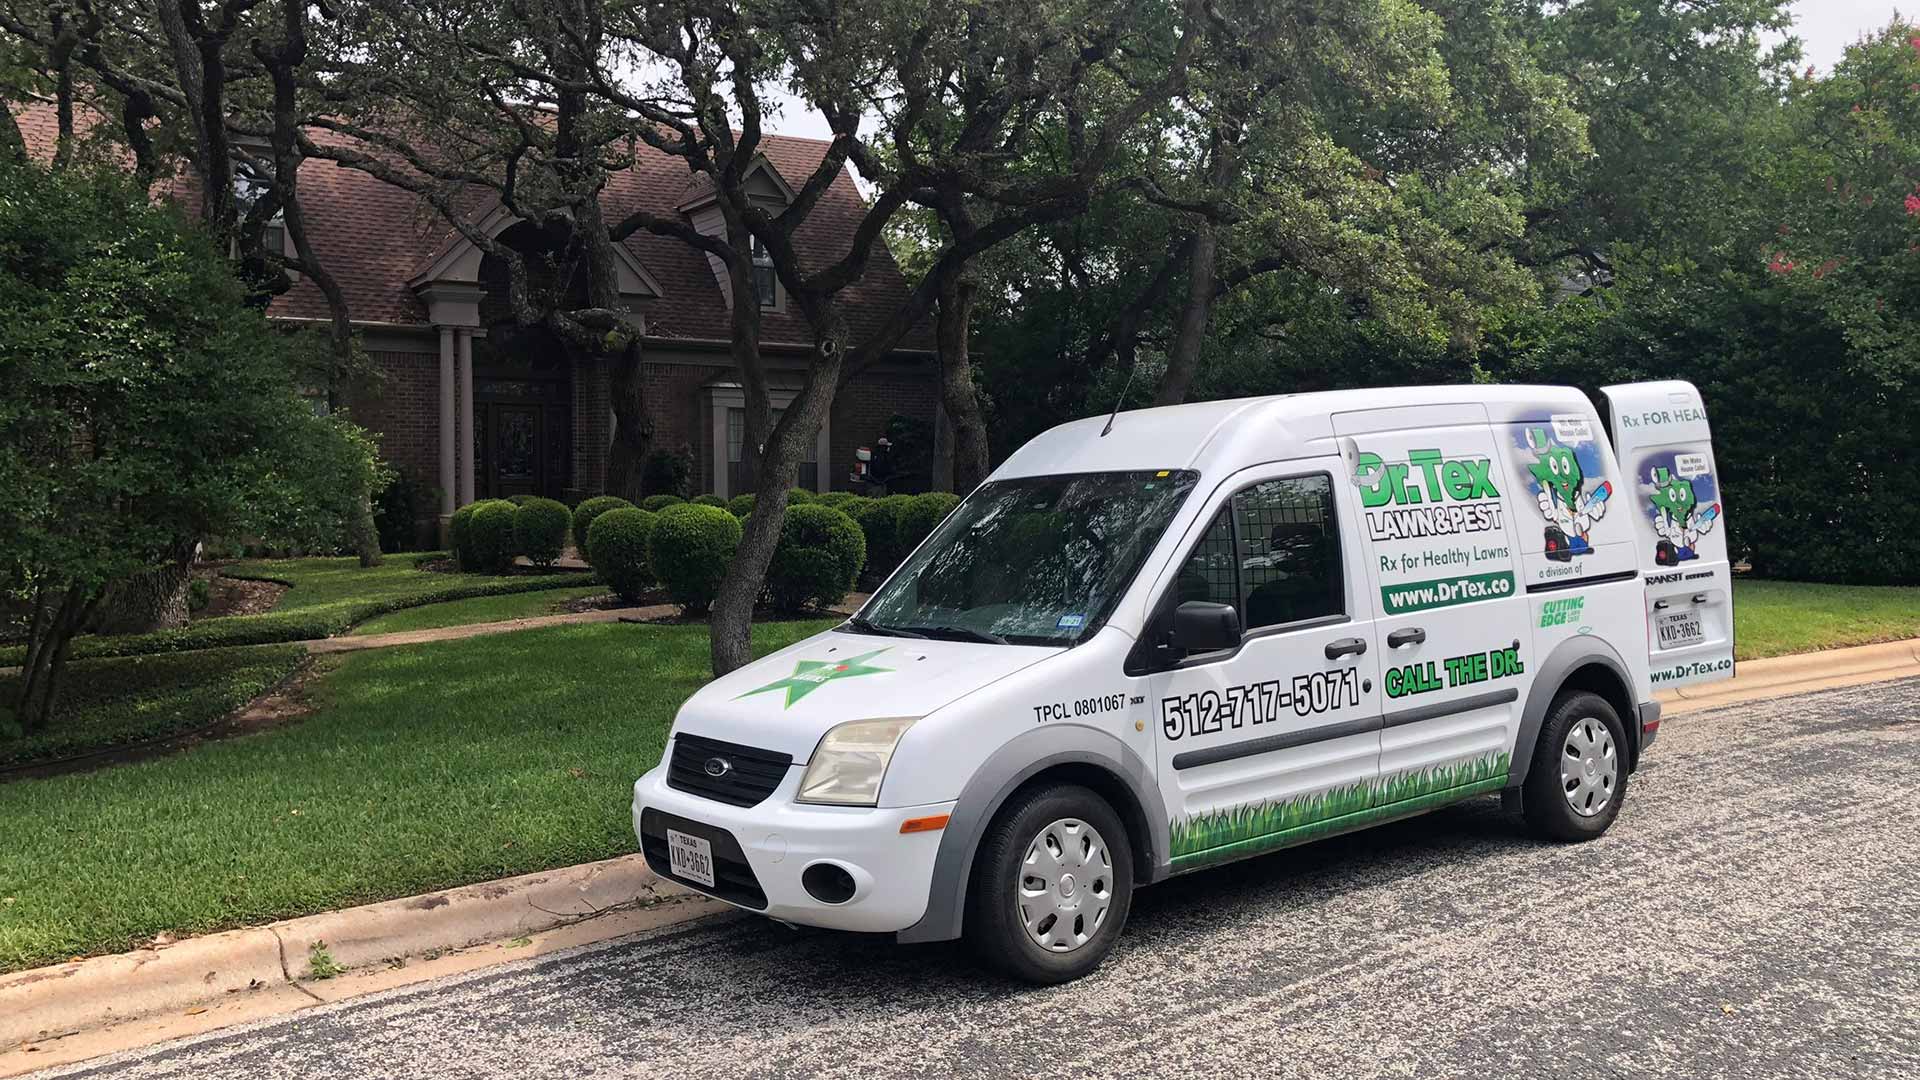 Dr. Tex work van shown in front of property in Austin, TX.